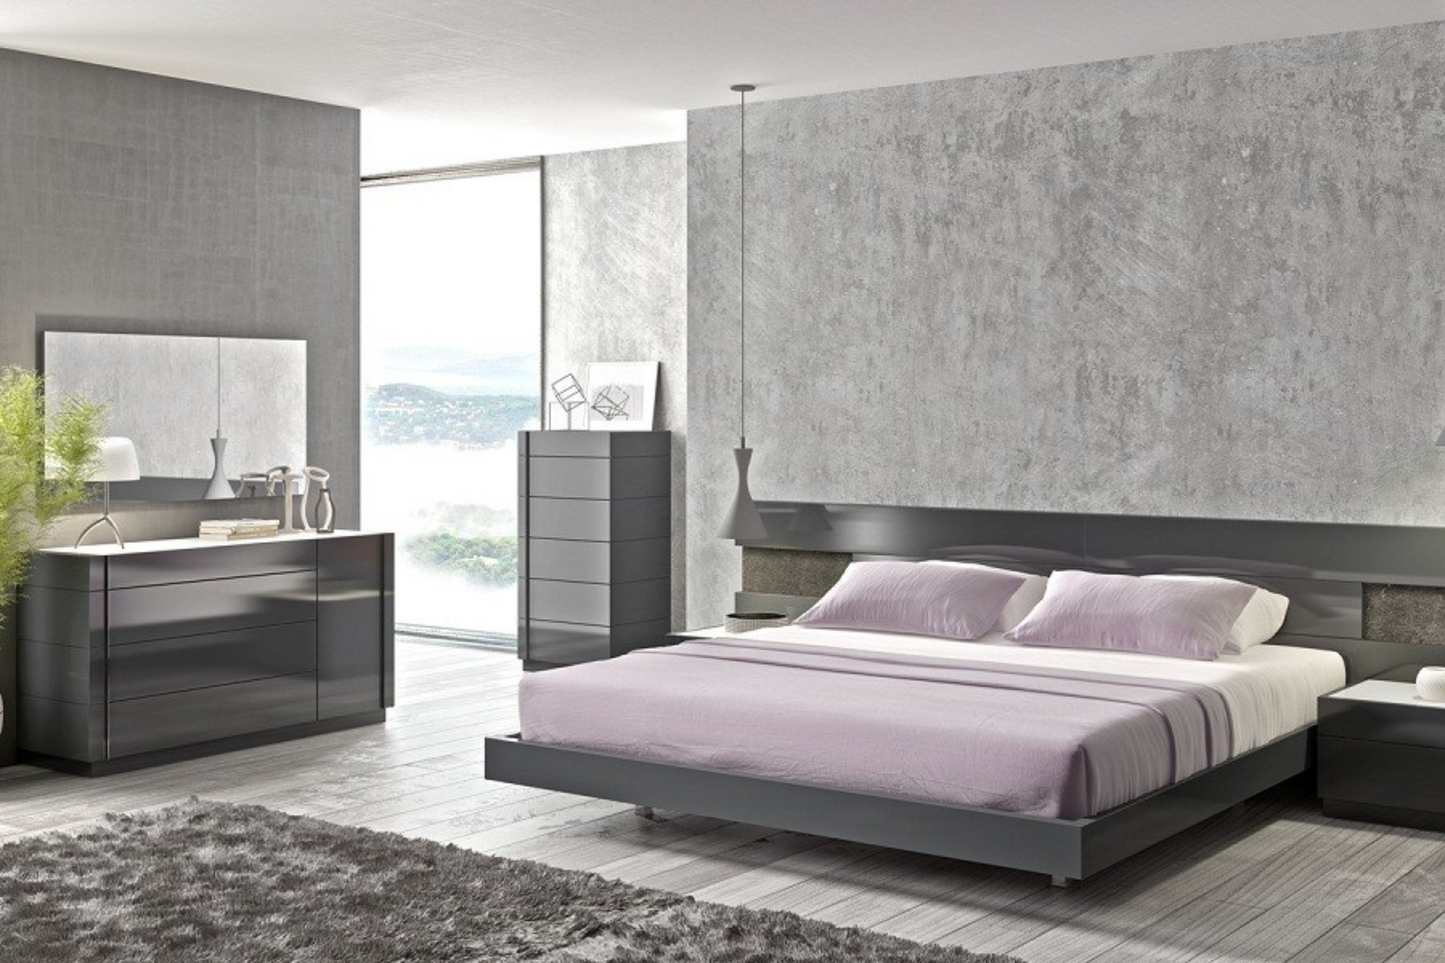 Braga Premium Bedroom Dresser SKU:178671